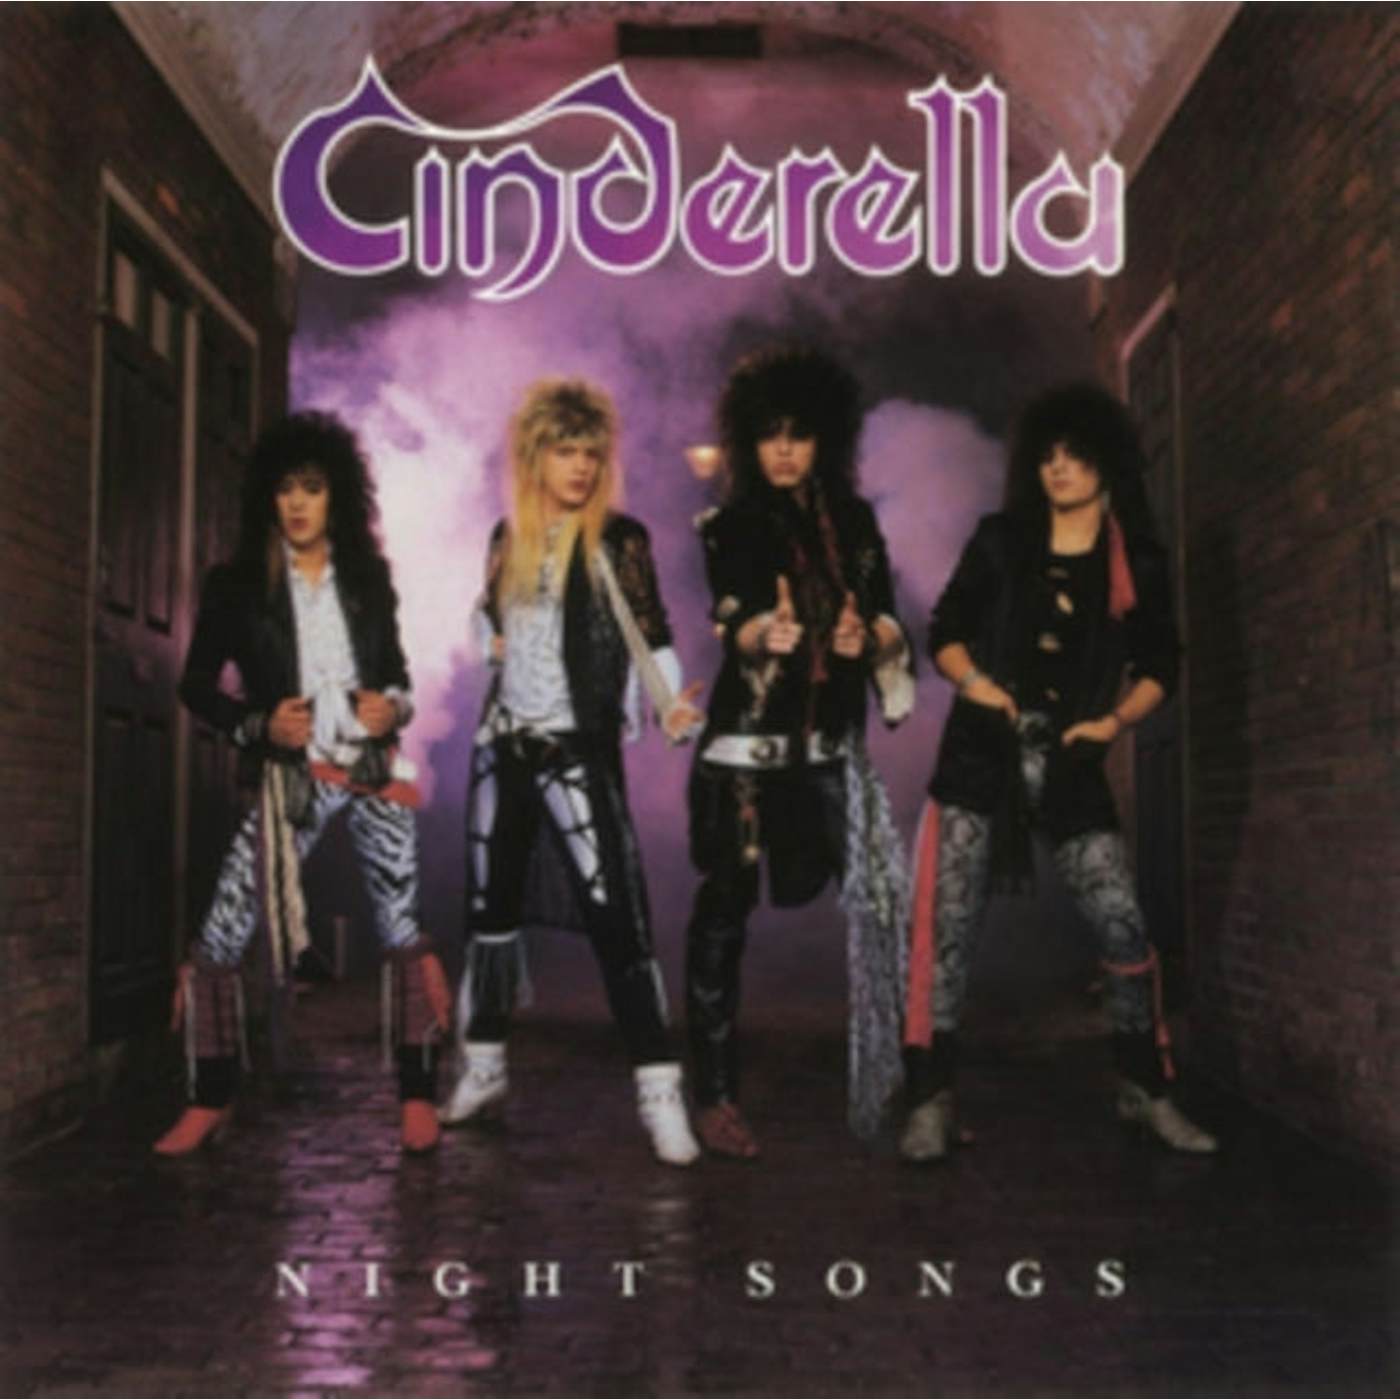 Cinderella LP Vinyl Record - Night Songs